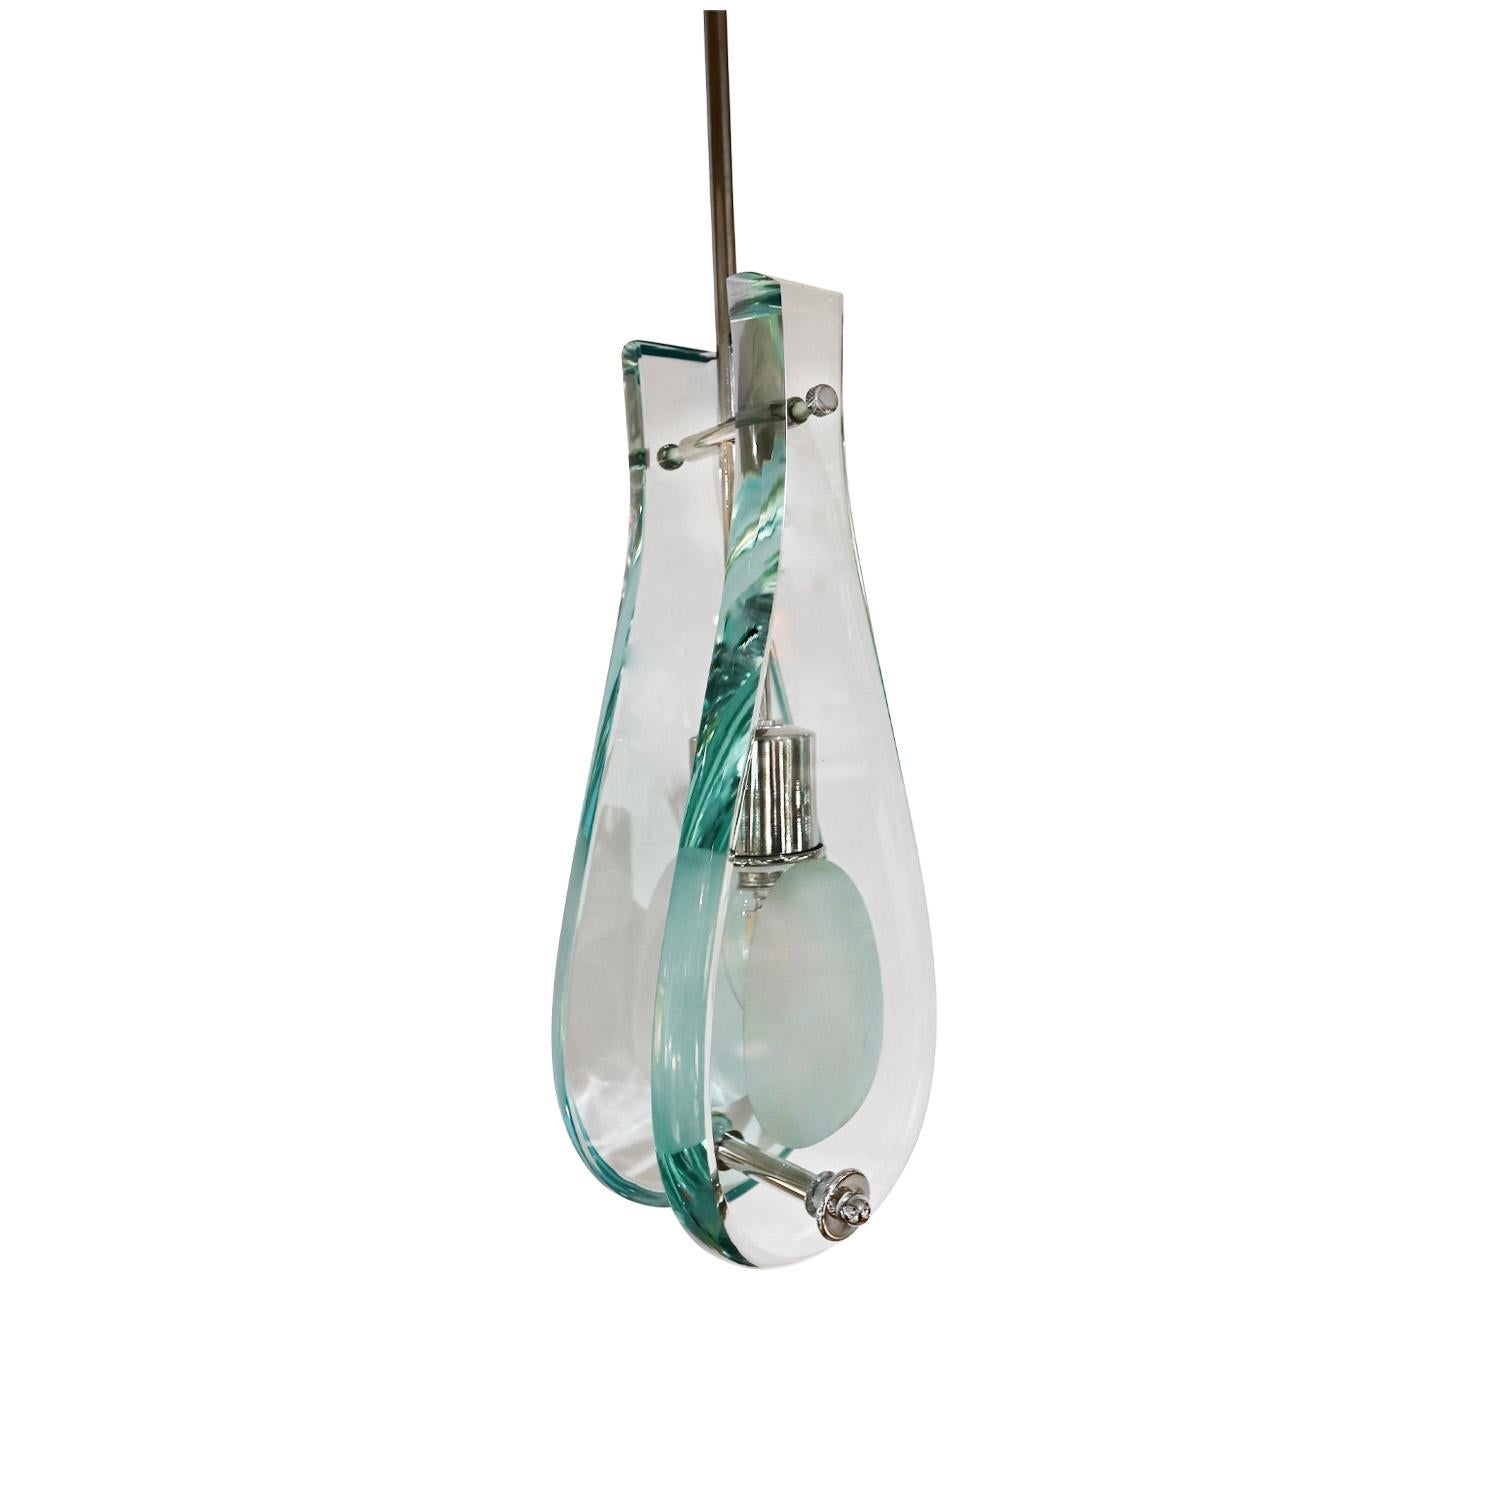 Mid-Century Modern Fontana Arte Style Pendant Light with Hand-Cut Glass Facades 1950s For Sale